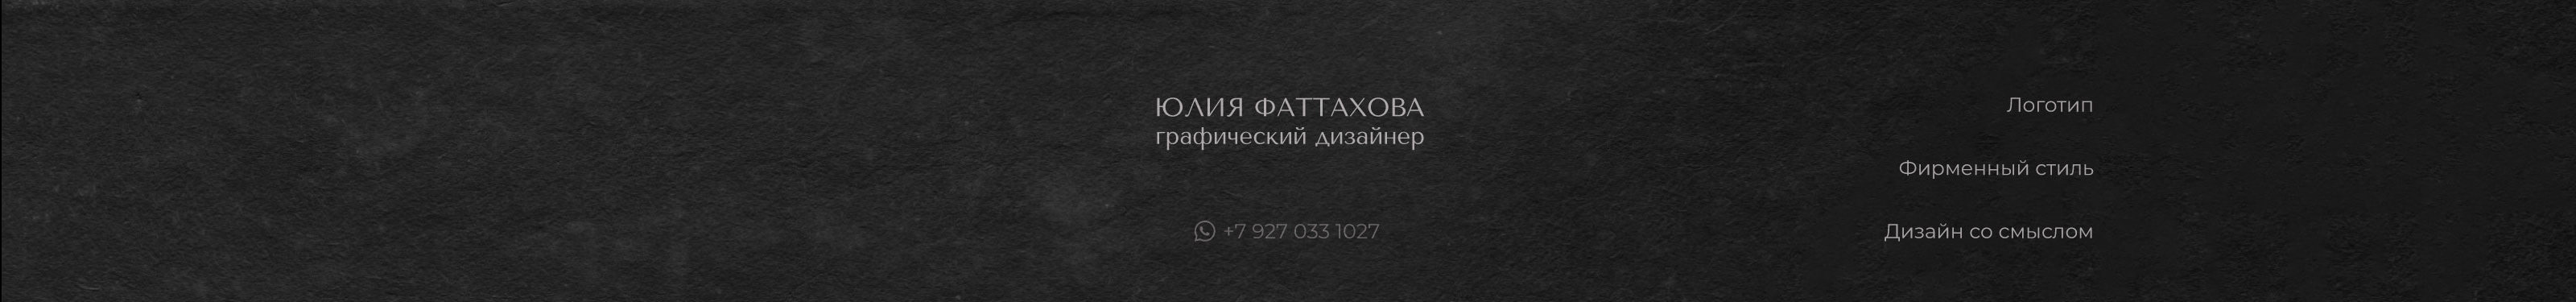 Юлия Фаттахова's profile banner